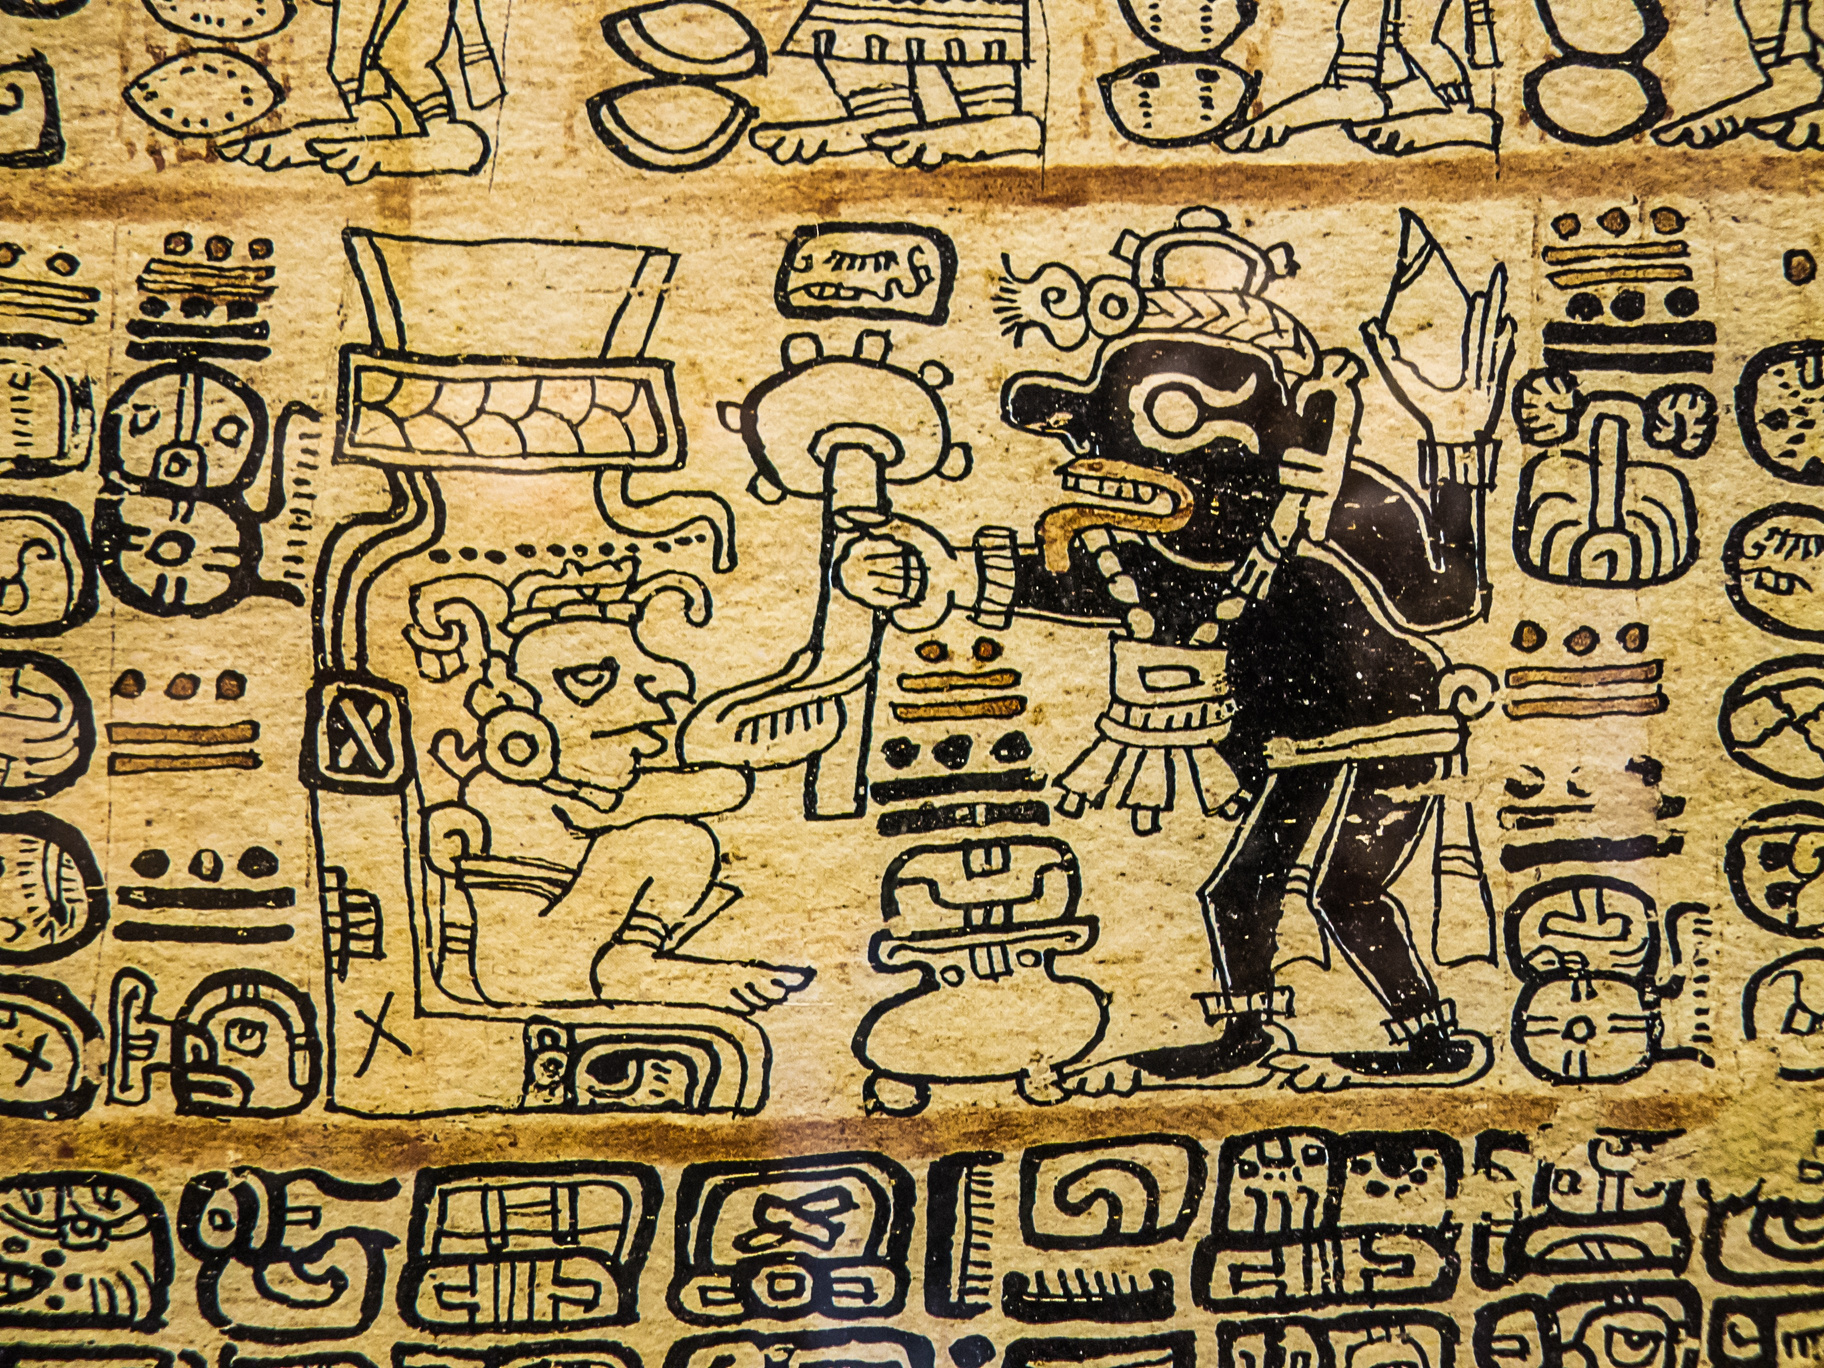 Aztec Hieroglyphic on a Wall